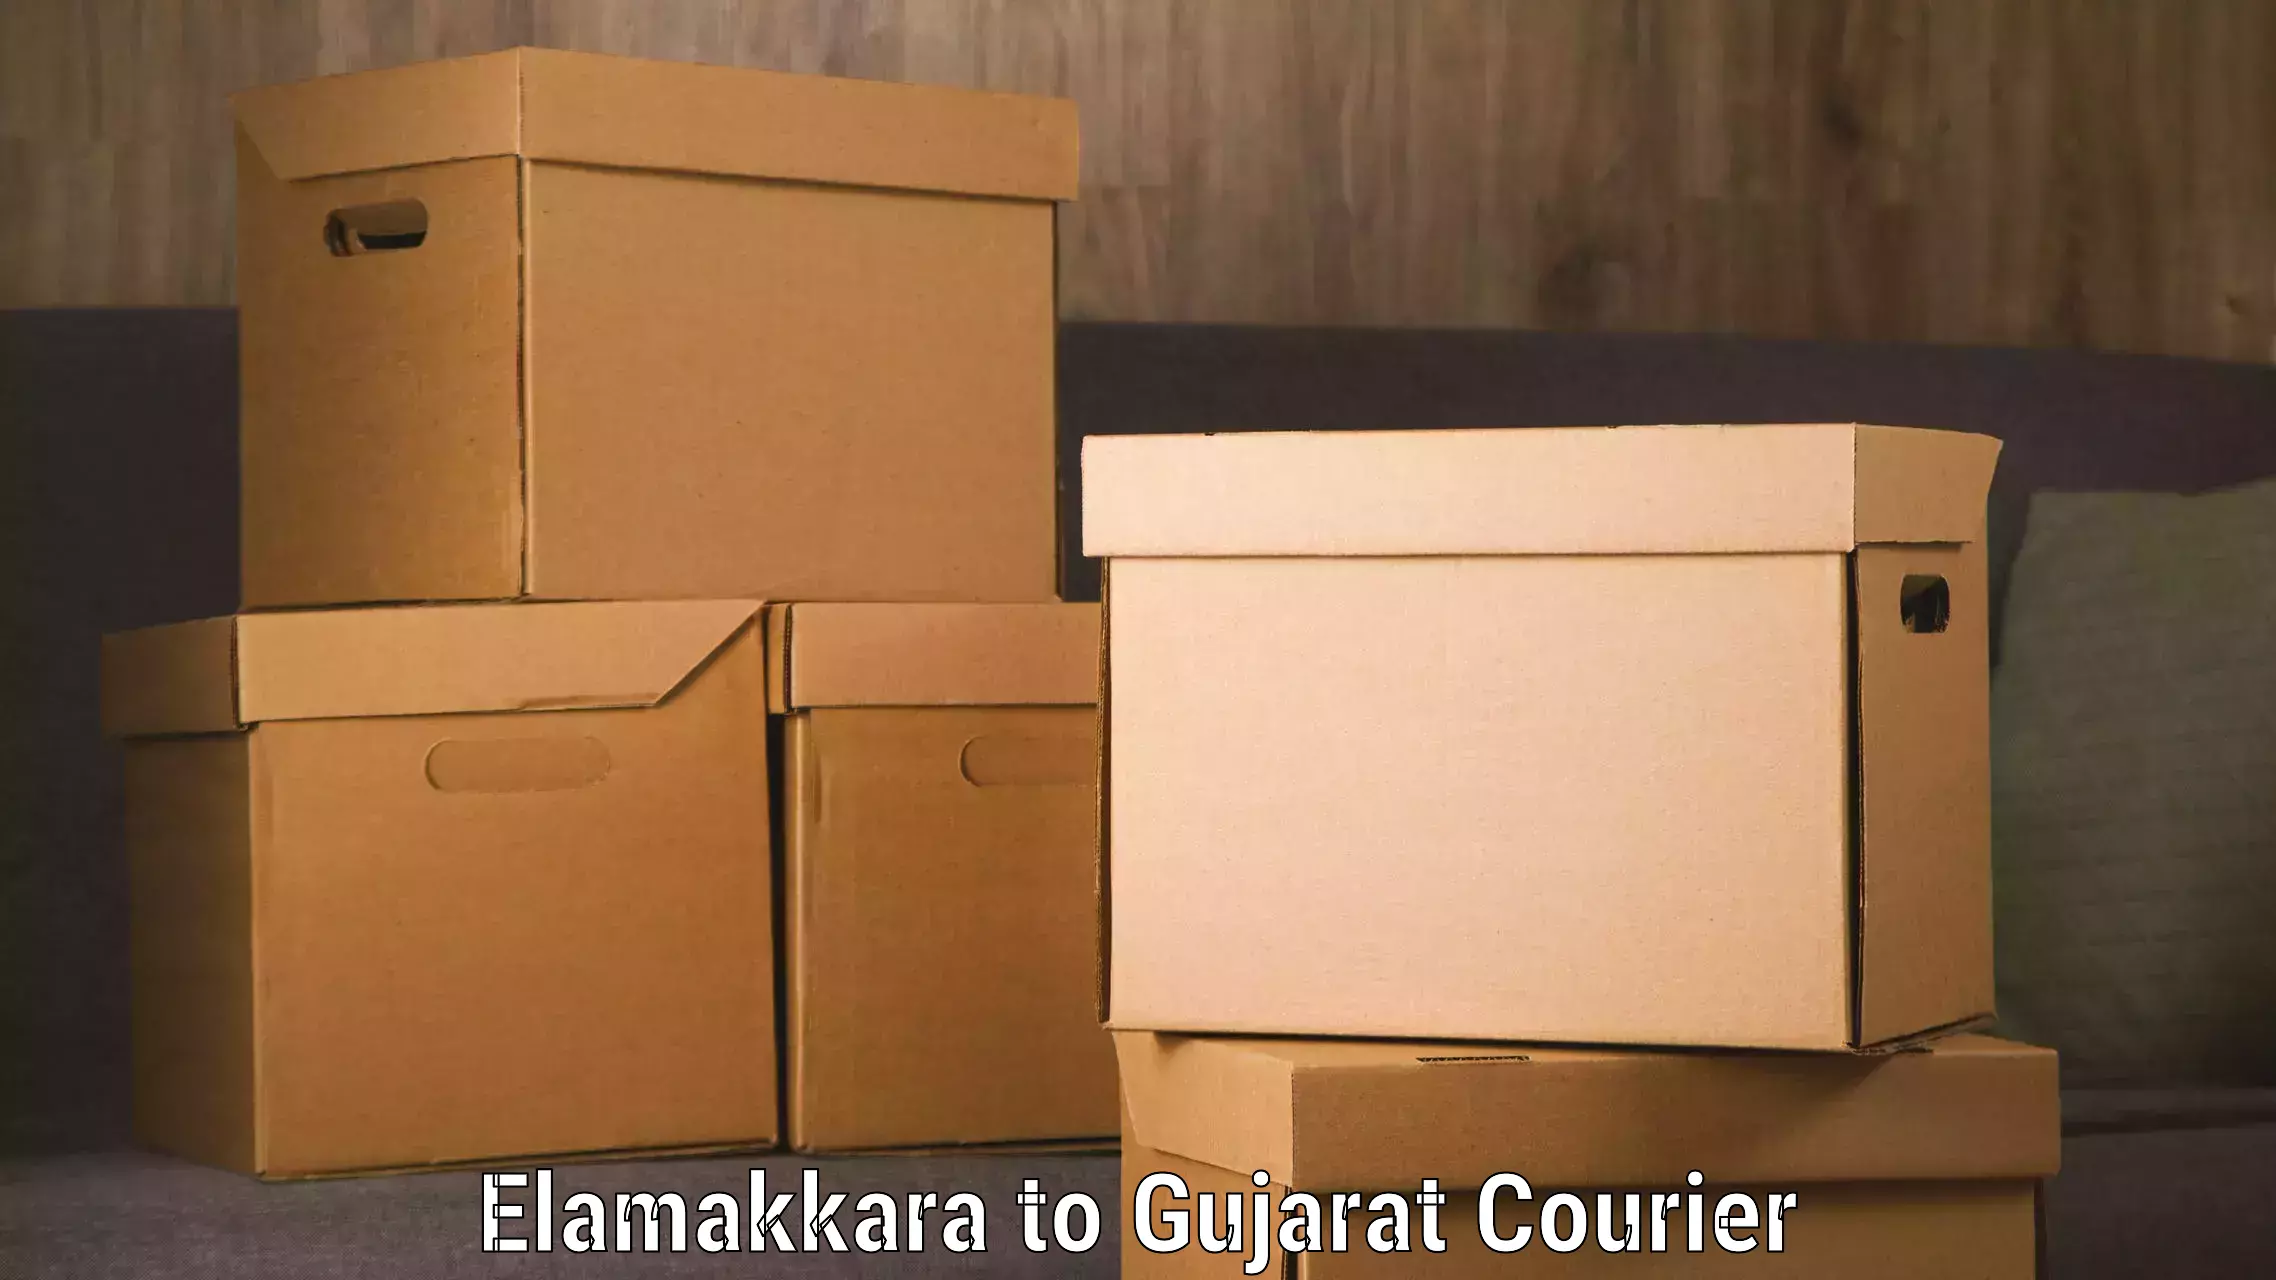 Courier service innovation Elamakkara to Gujarat